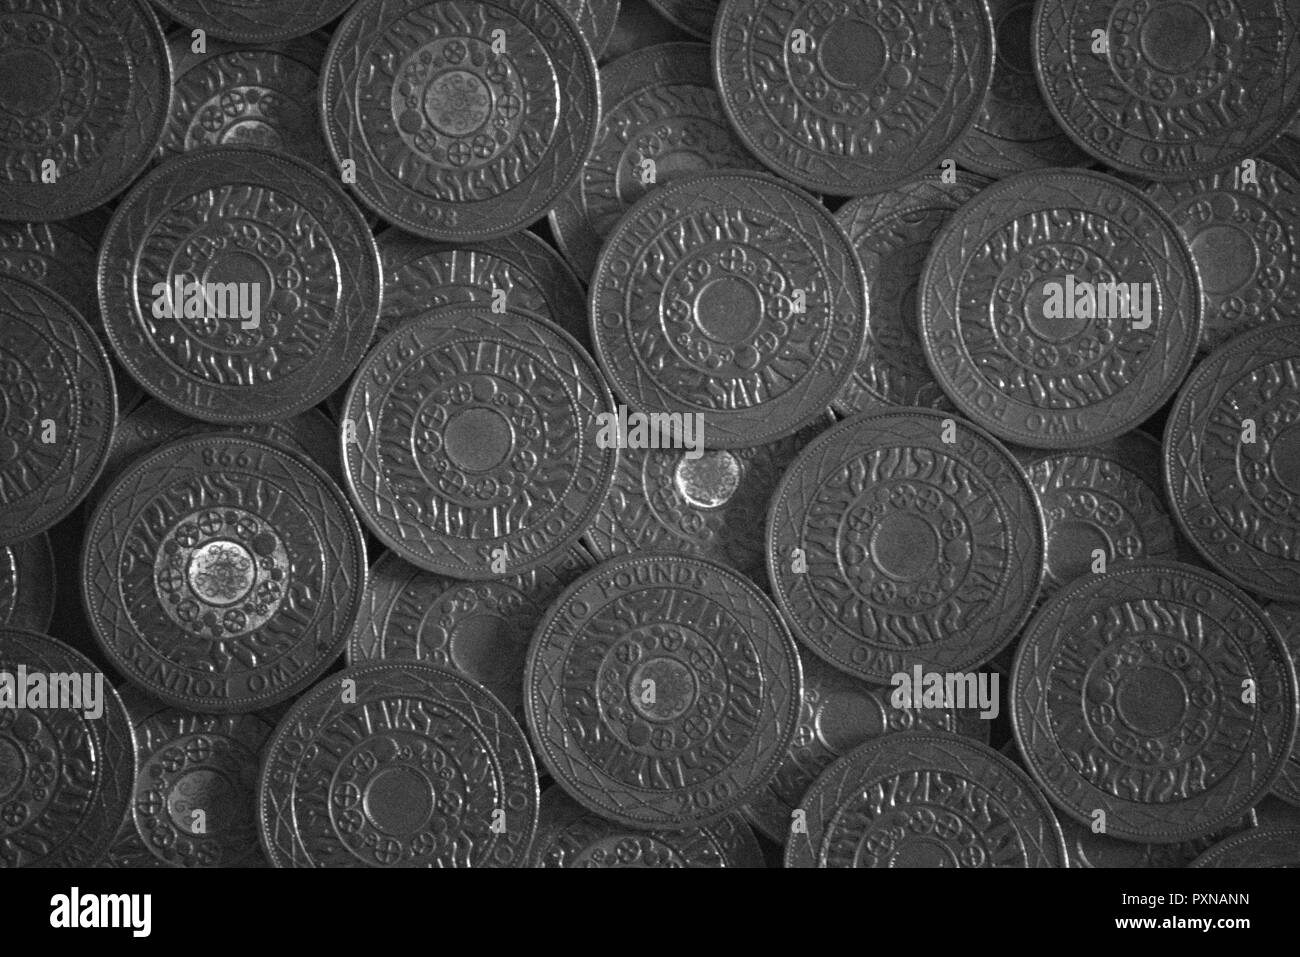 British two pound (£2) coins Stock Photo